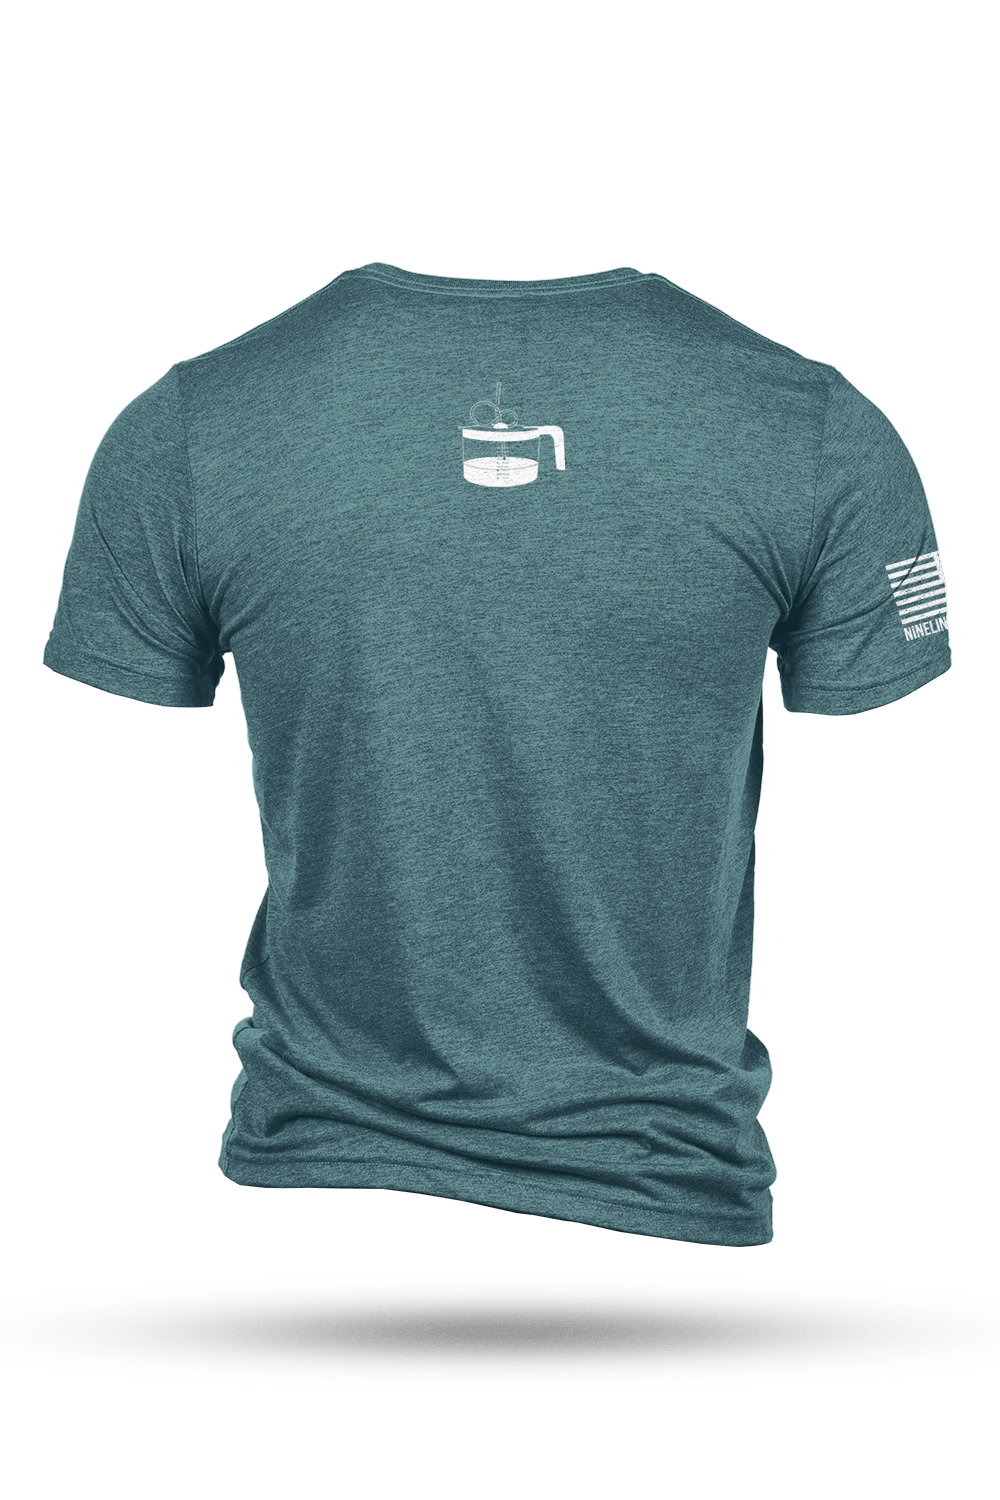 Men's Tri-Blend T-Shirt - NOT RESPONSIBLE - Nine Line Apparel